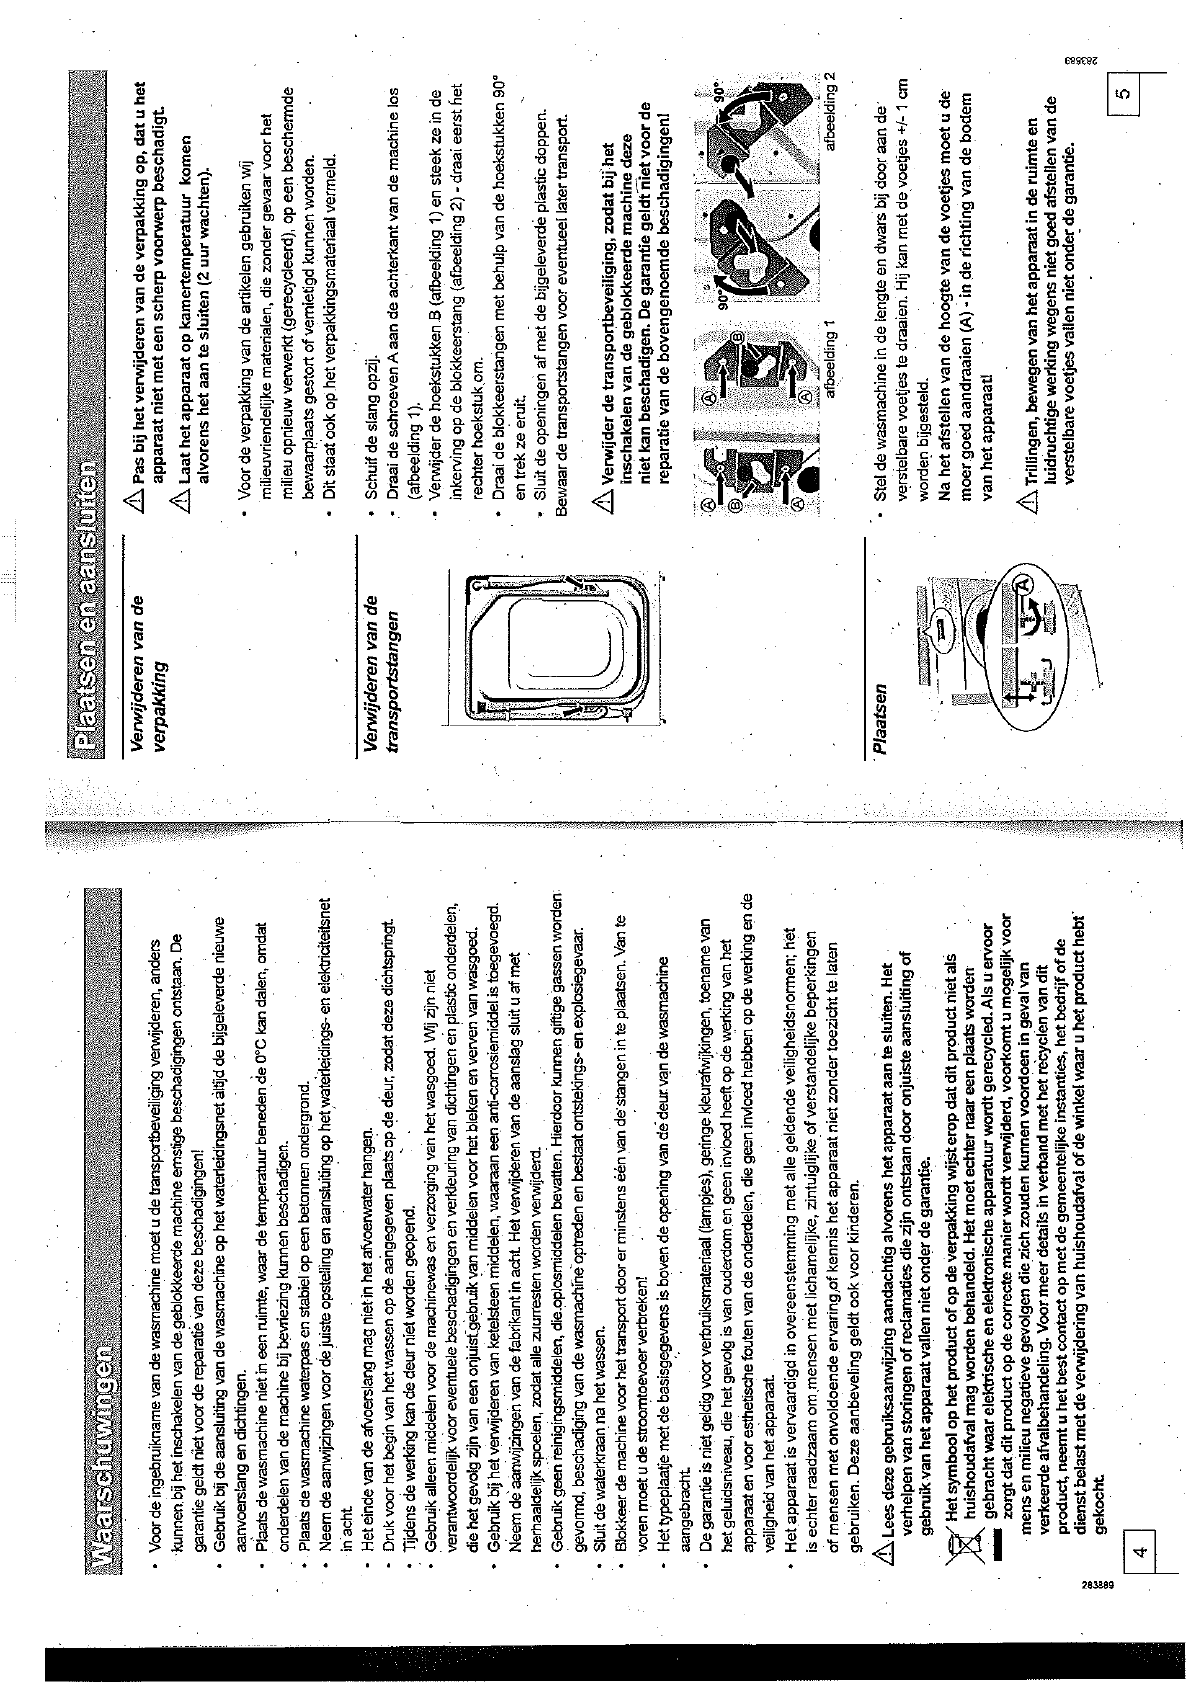 Handleiding Friac wa 1453 d (pagina 3 van 15)